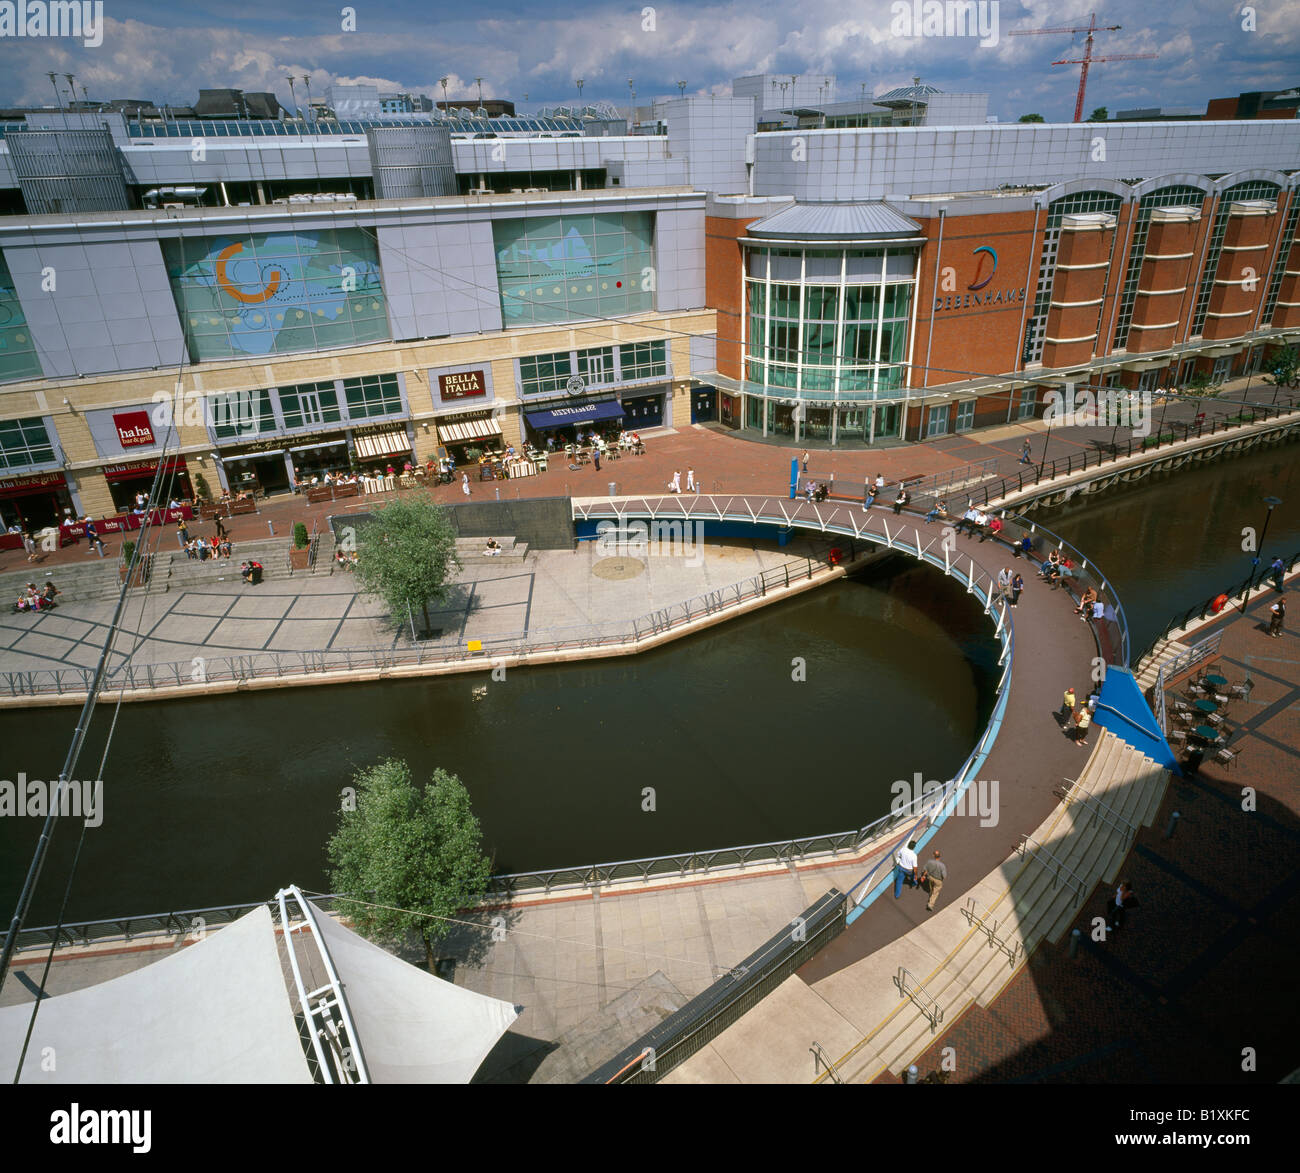 The Oracle shopping center. Reading, Berkshire, England, UK. Stock Photo